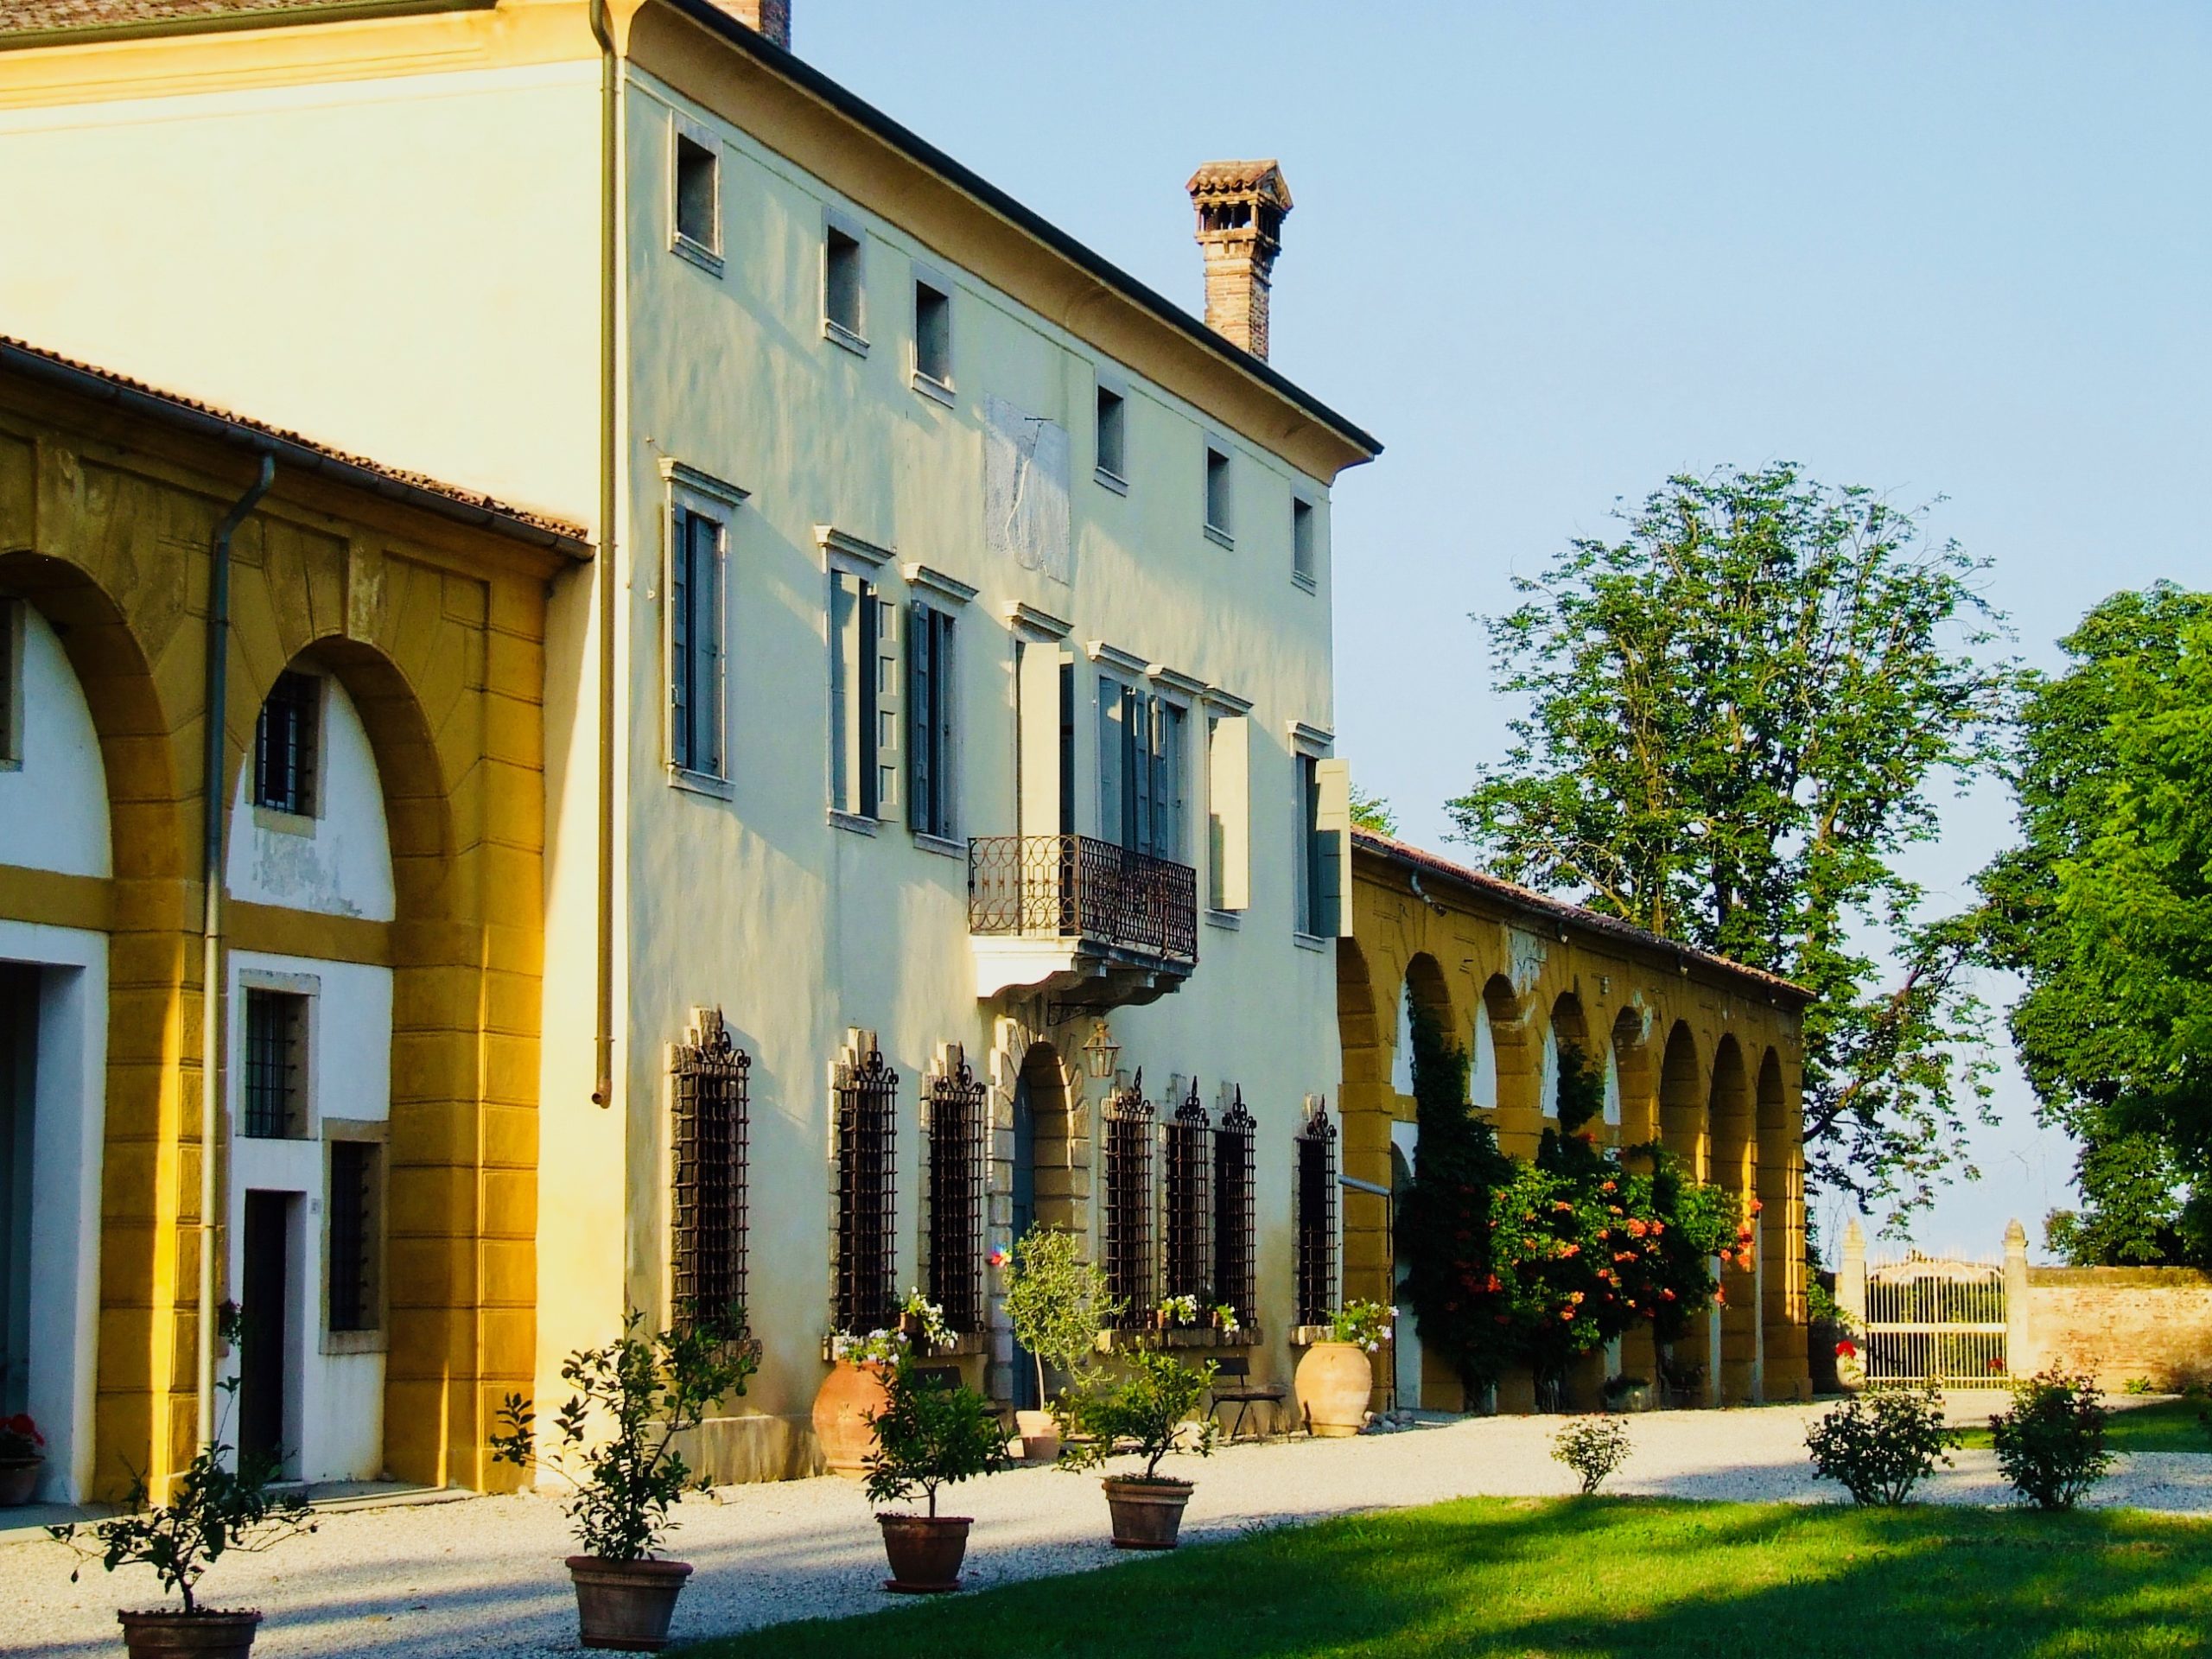 The Facade at Villa Maffei Rizzardi